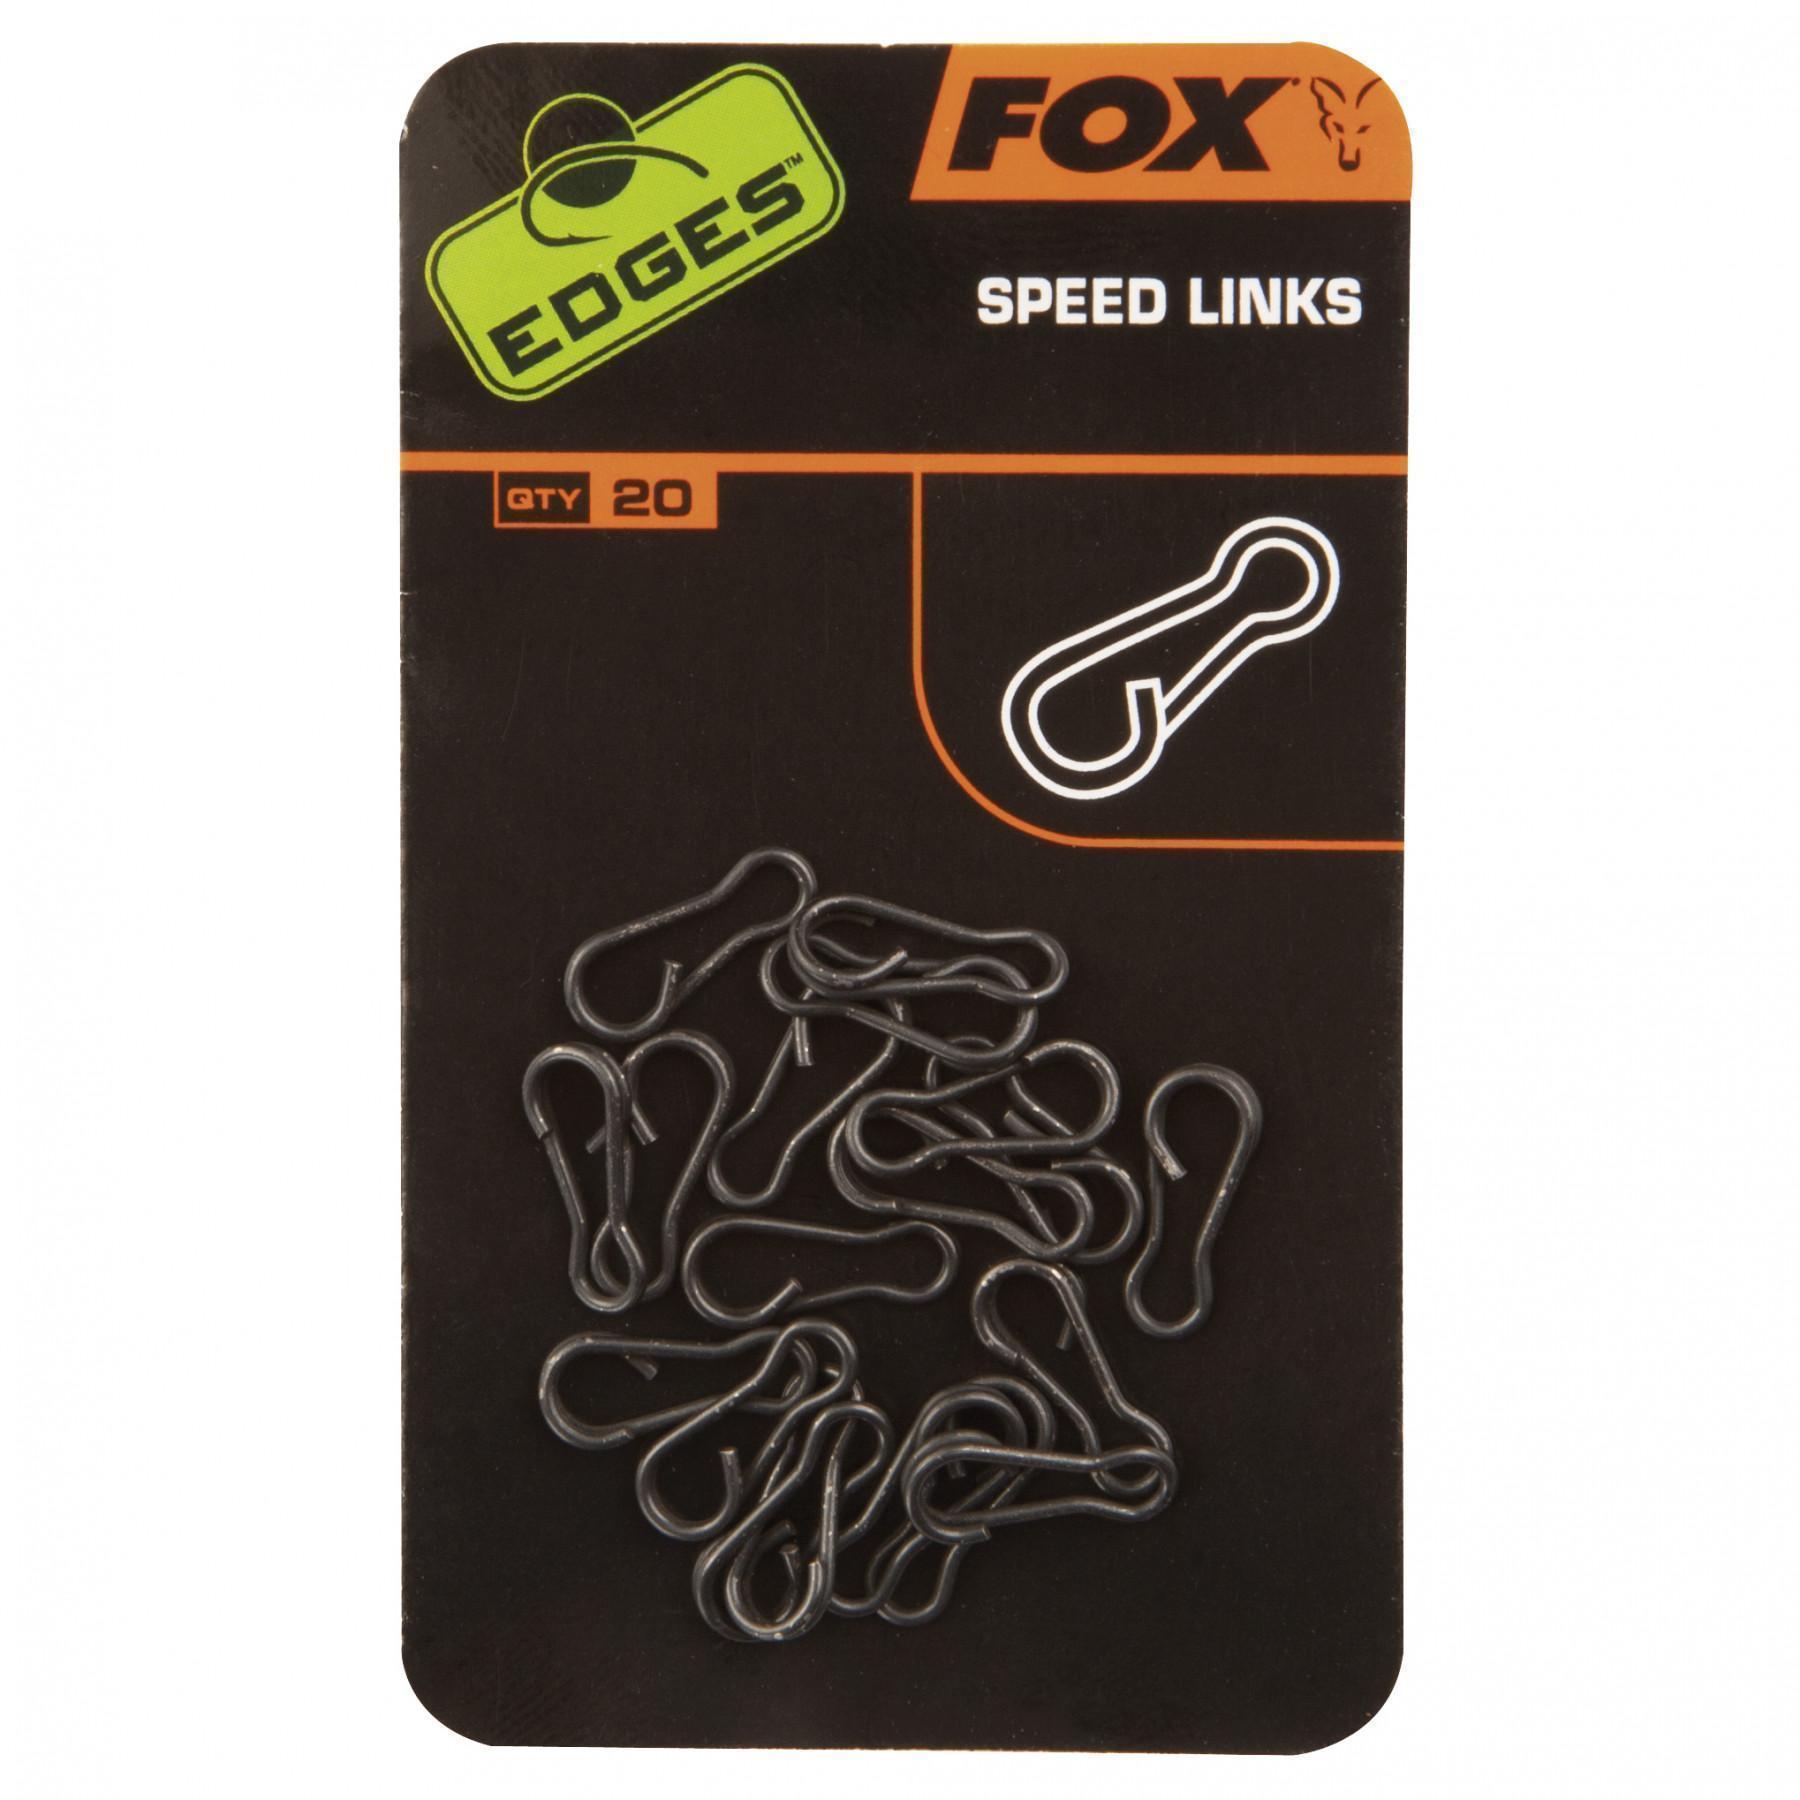 Speed links Fox Edges